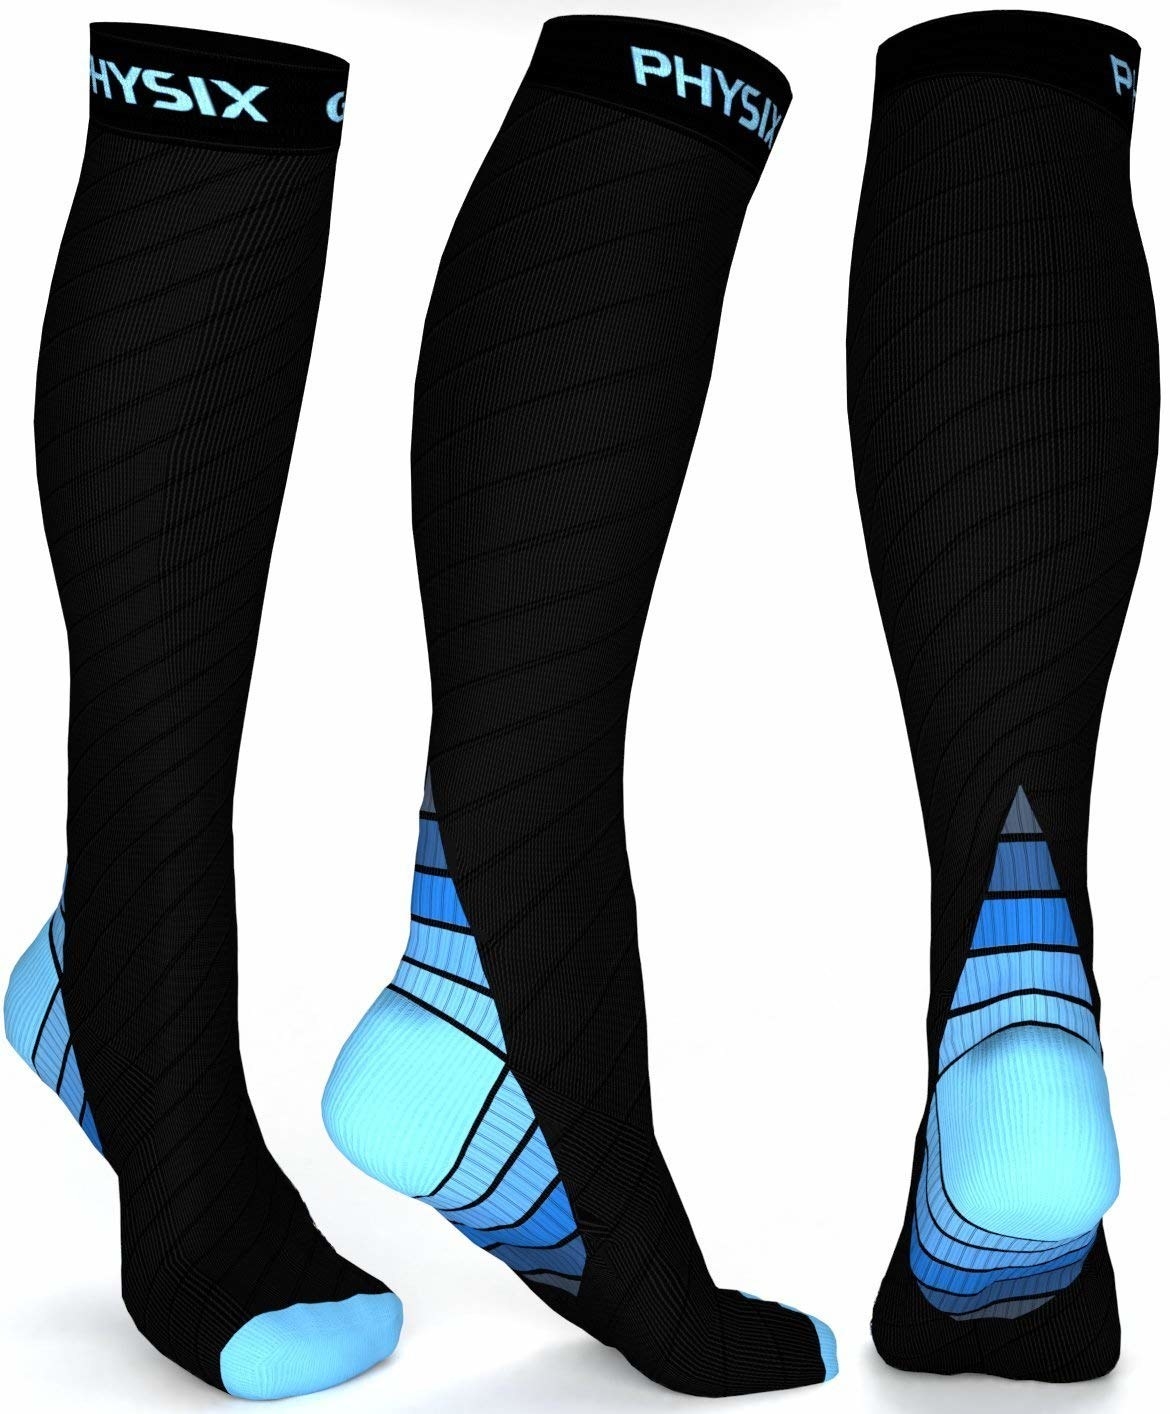 Three black and blue compression socks